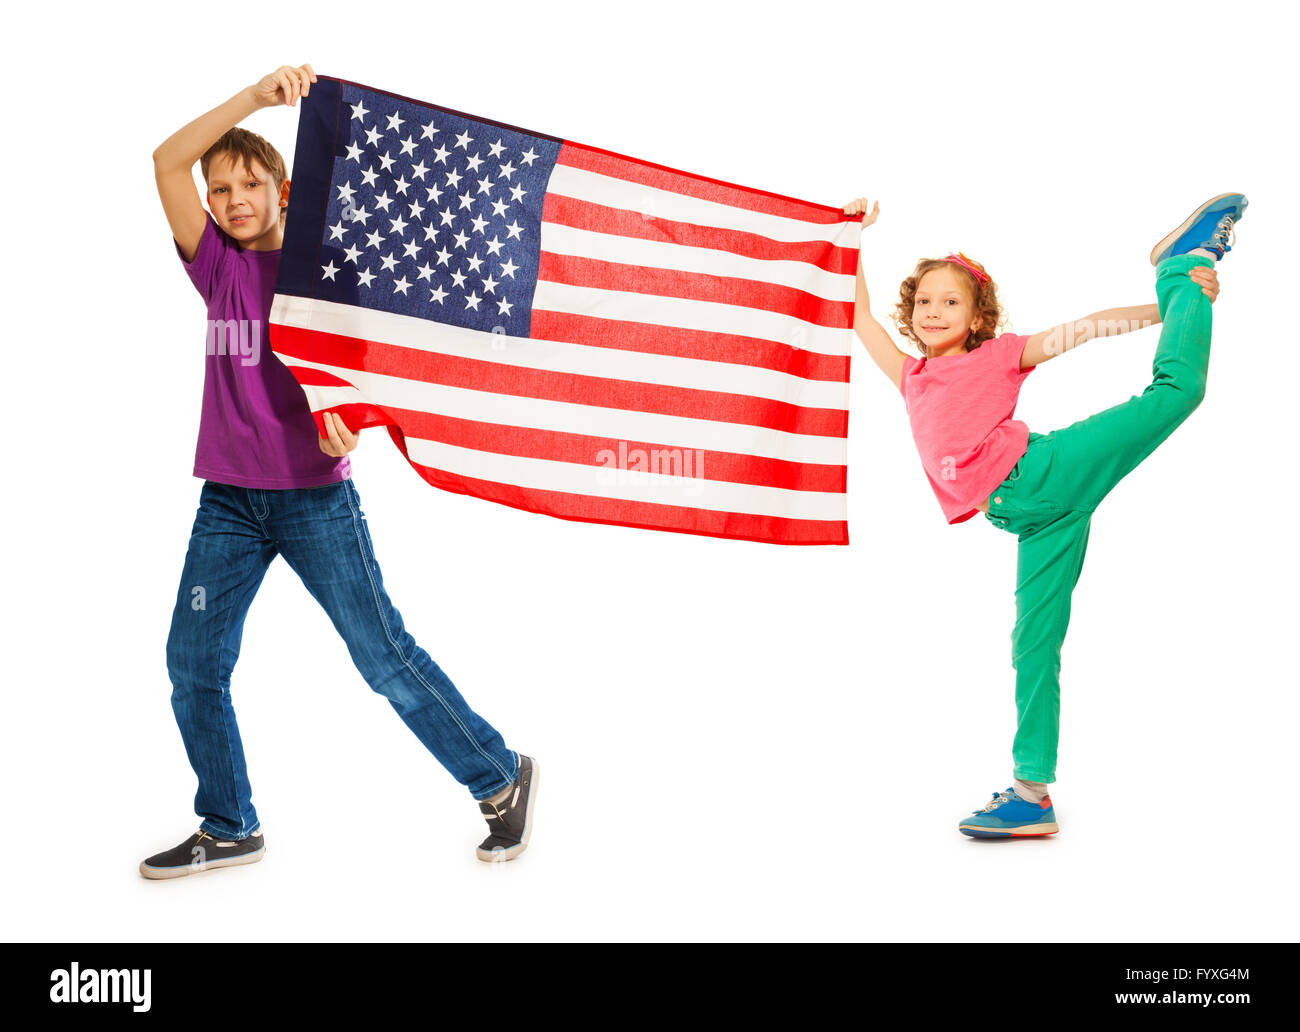 Funny smiling kids waving American flag Stock Photo